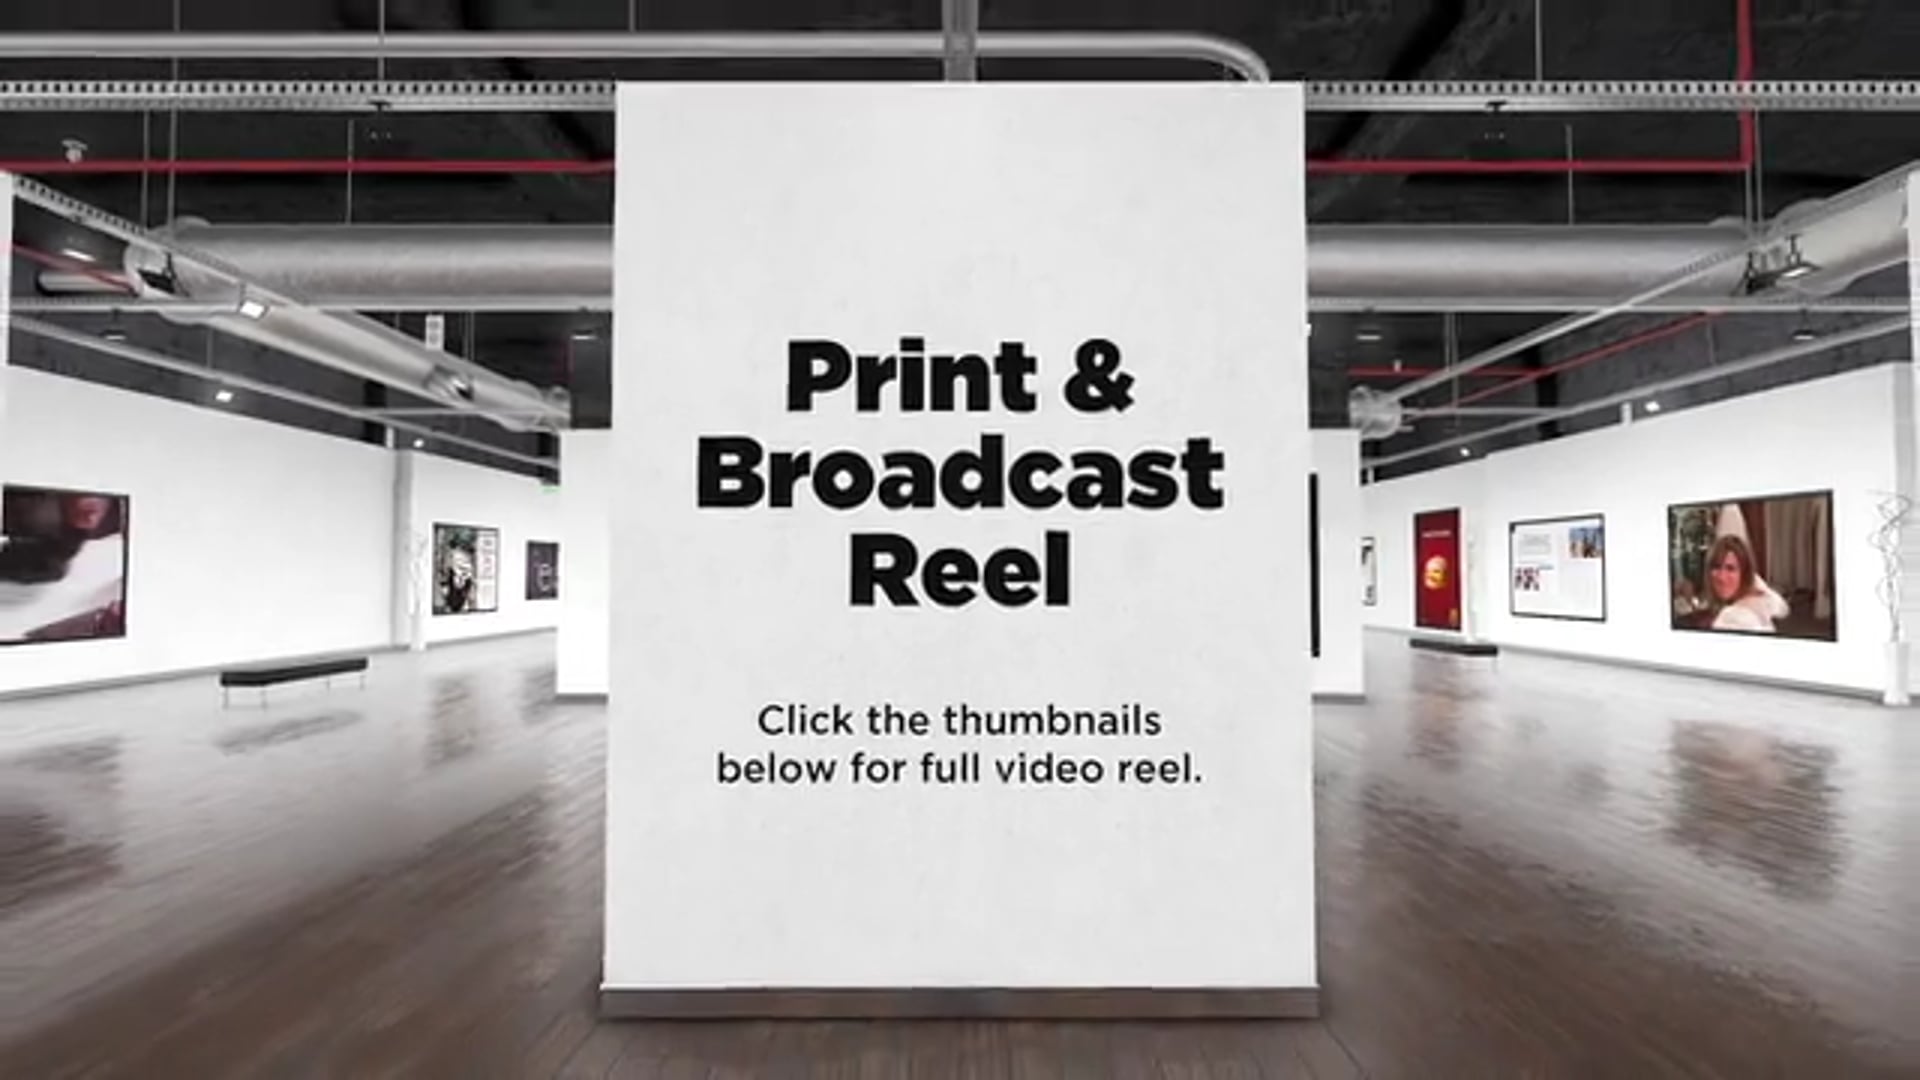 Print & Broadcast Reel